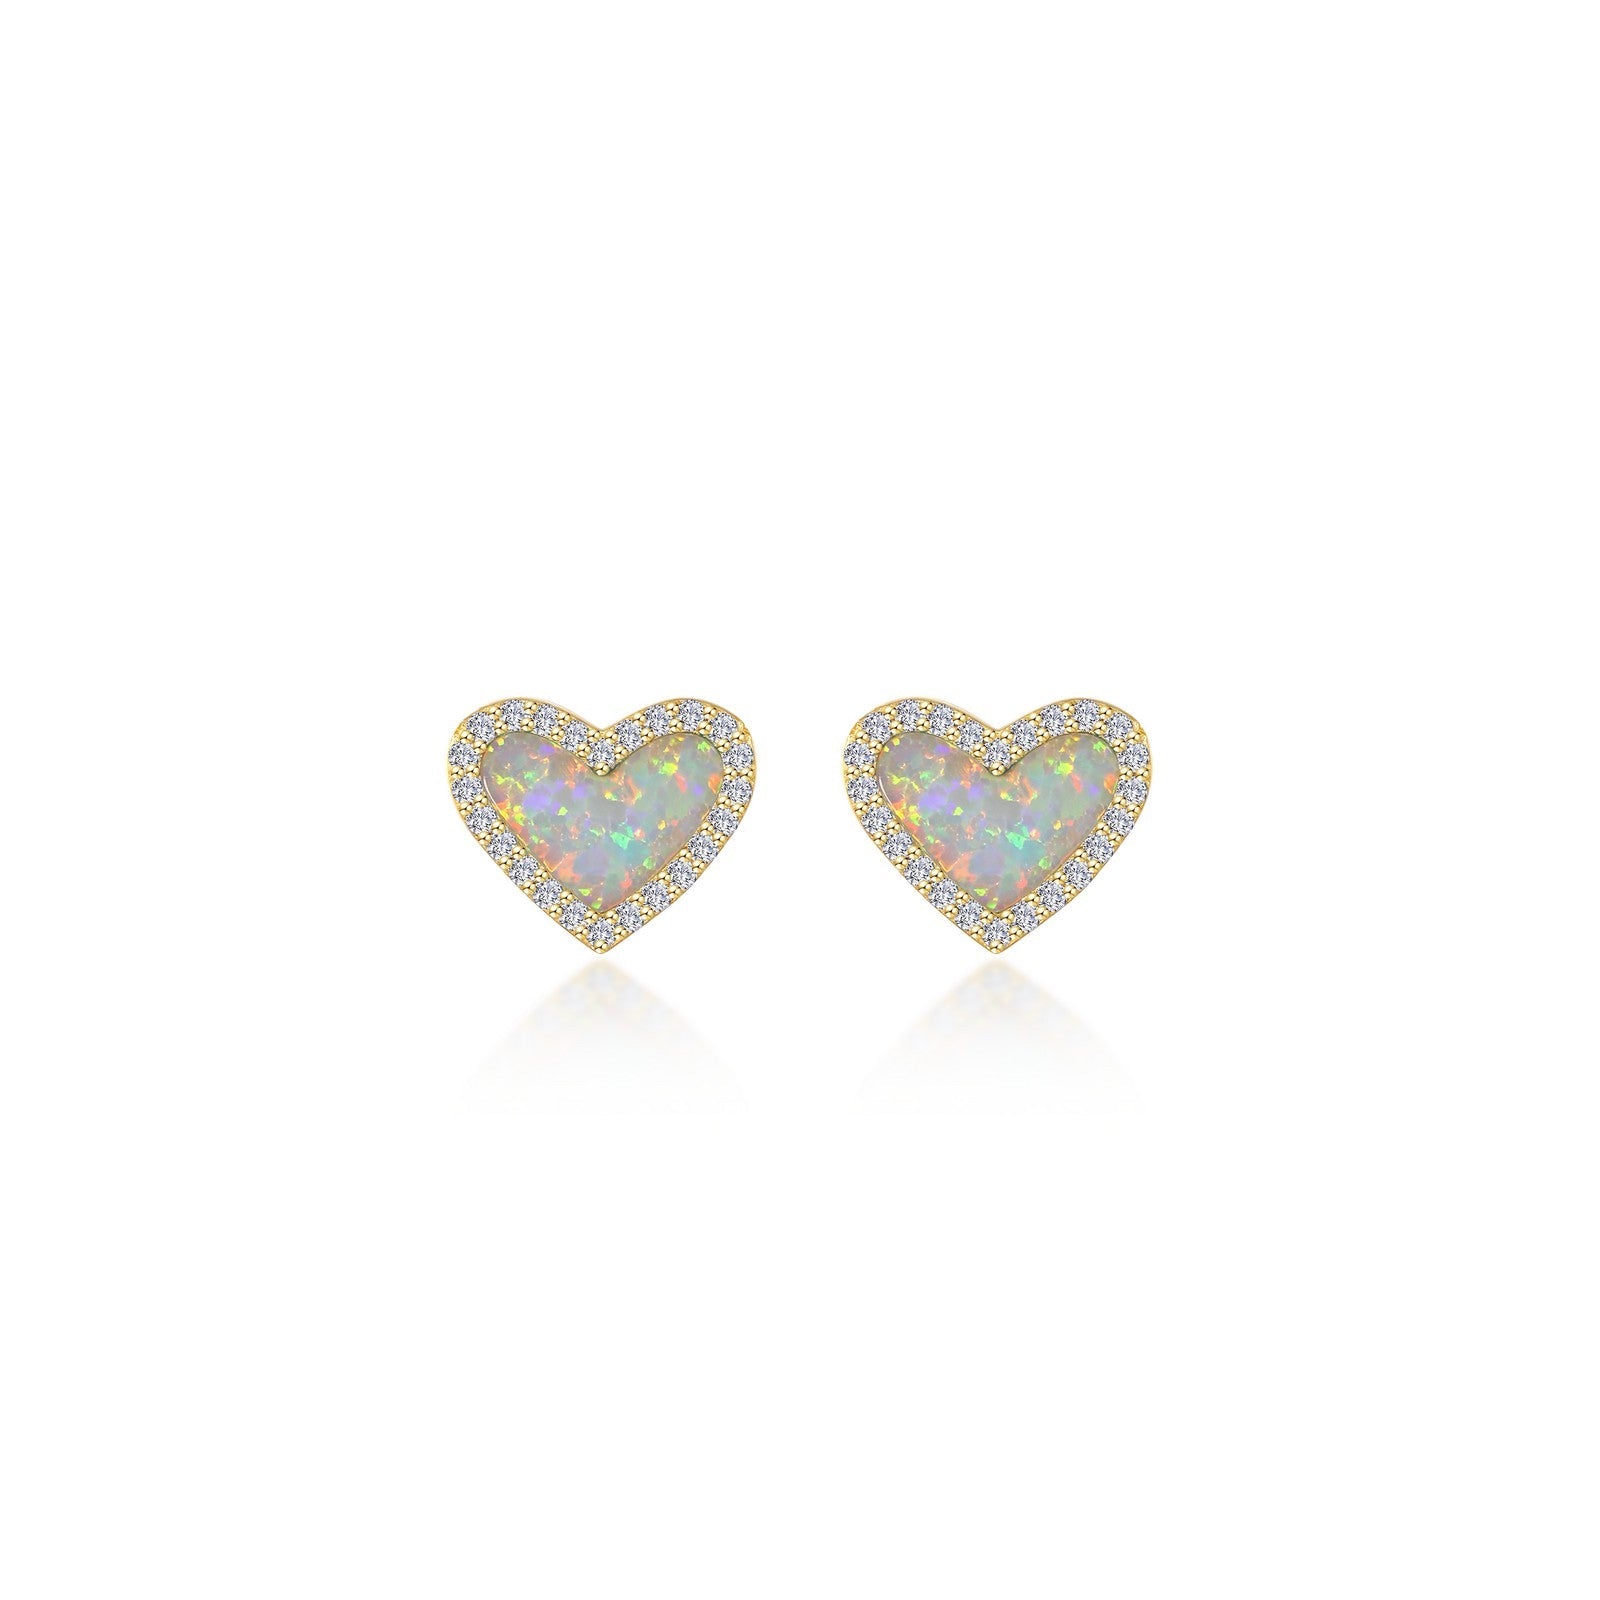 Halo Heart Stud Earrings-E0607OPG